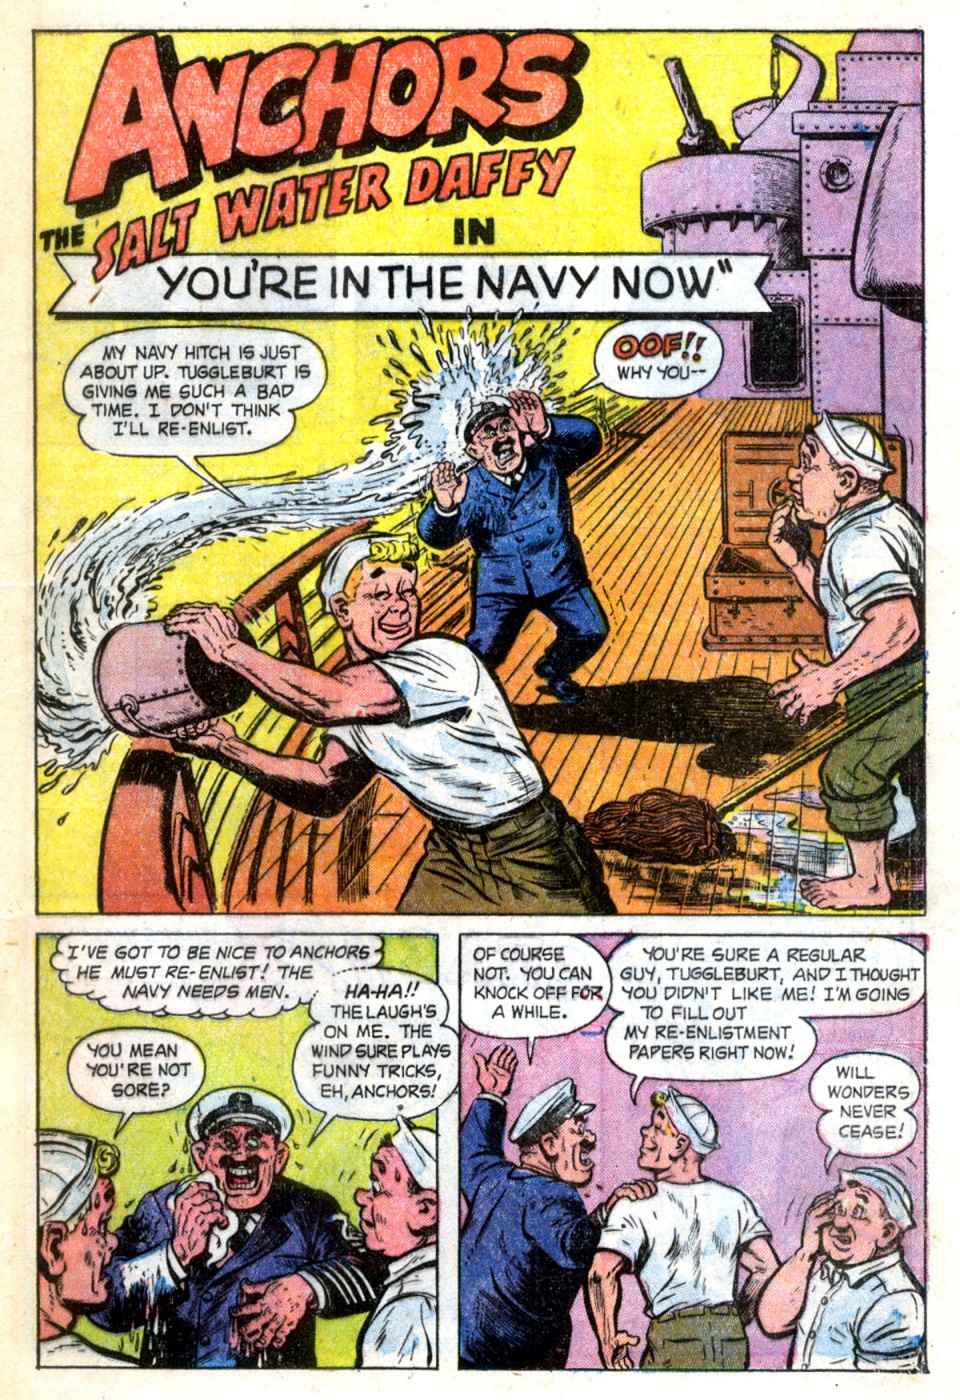 Anchors the Salt Water Daffy - Comics (17)